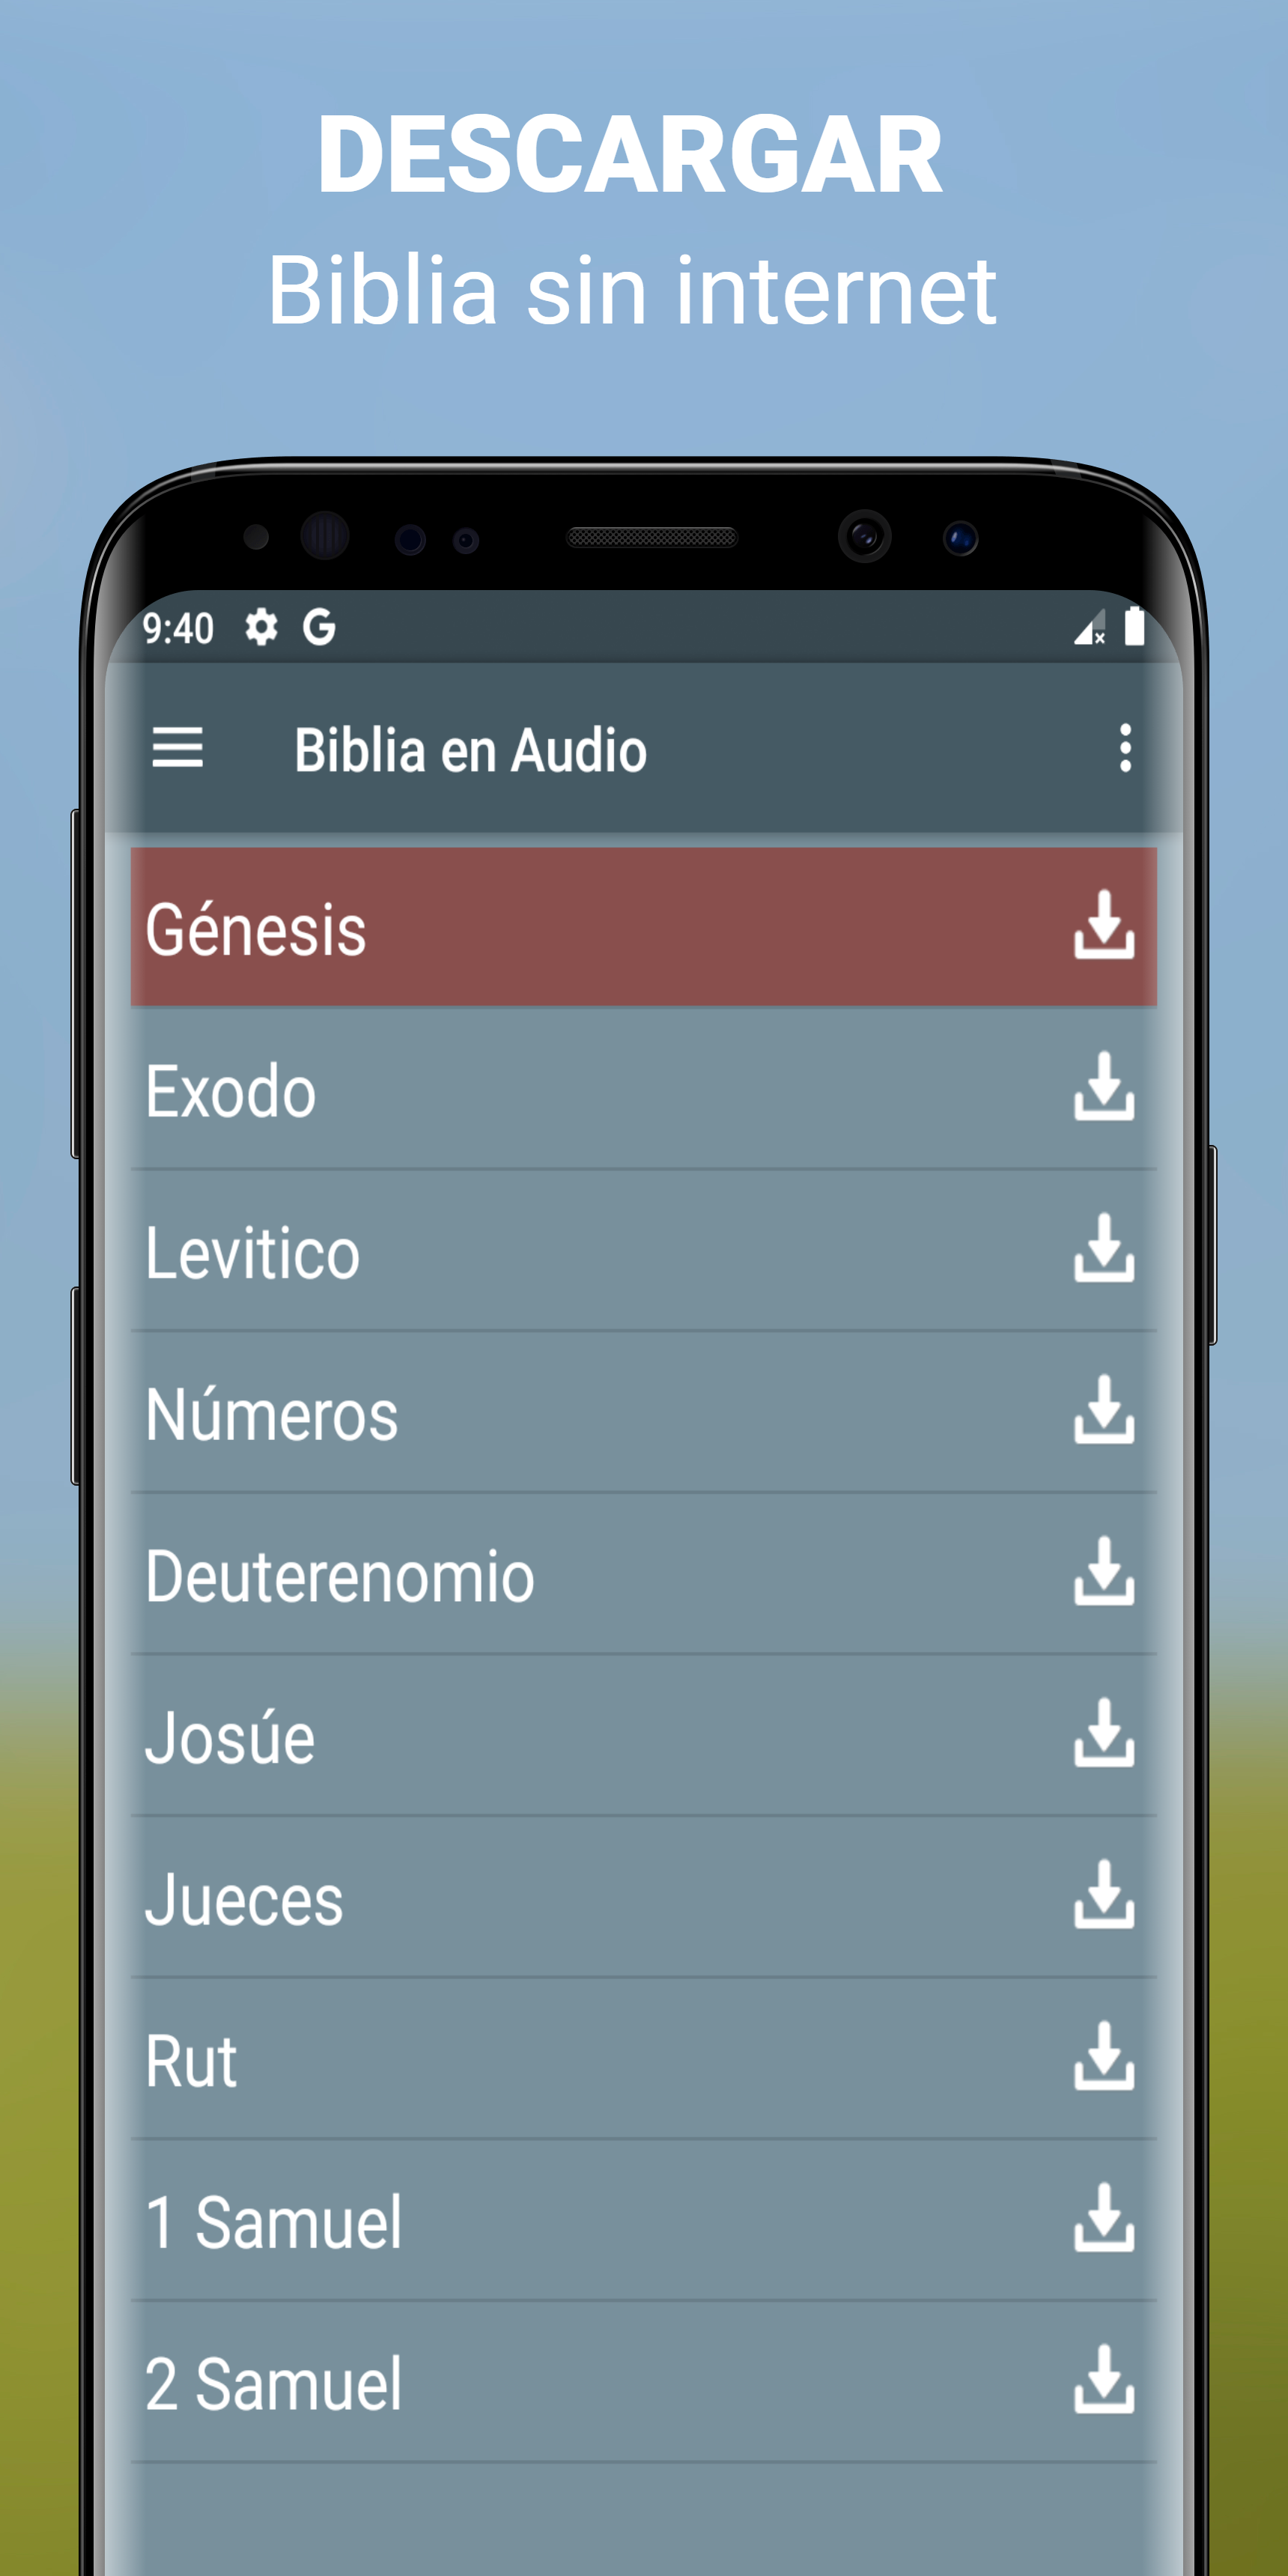 Audio Biblia en Español app APK 3.1.1252 for Android – Download Audio Biblia  en Español app APK Latest Version from APKFab.com